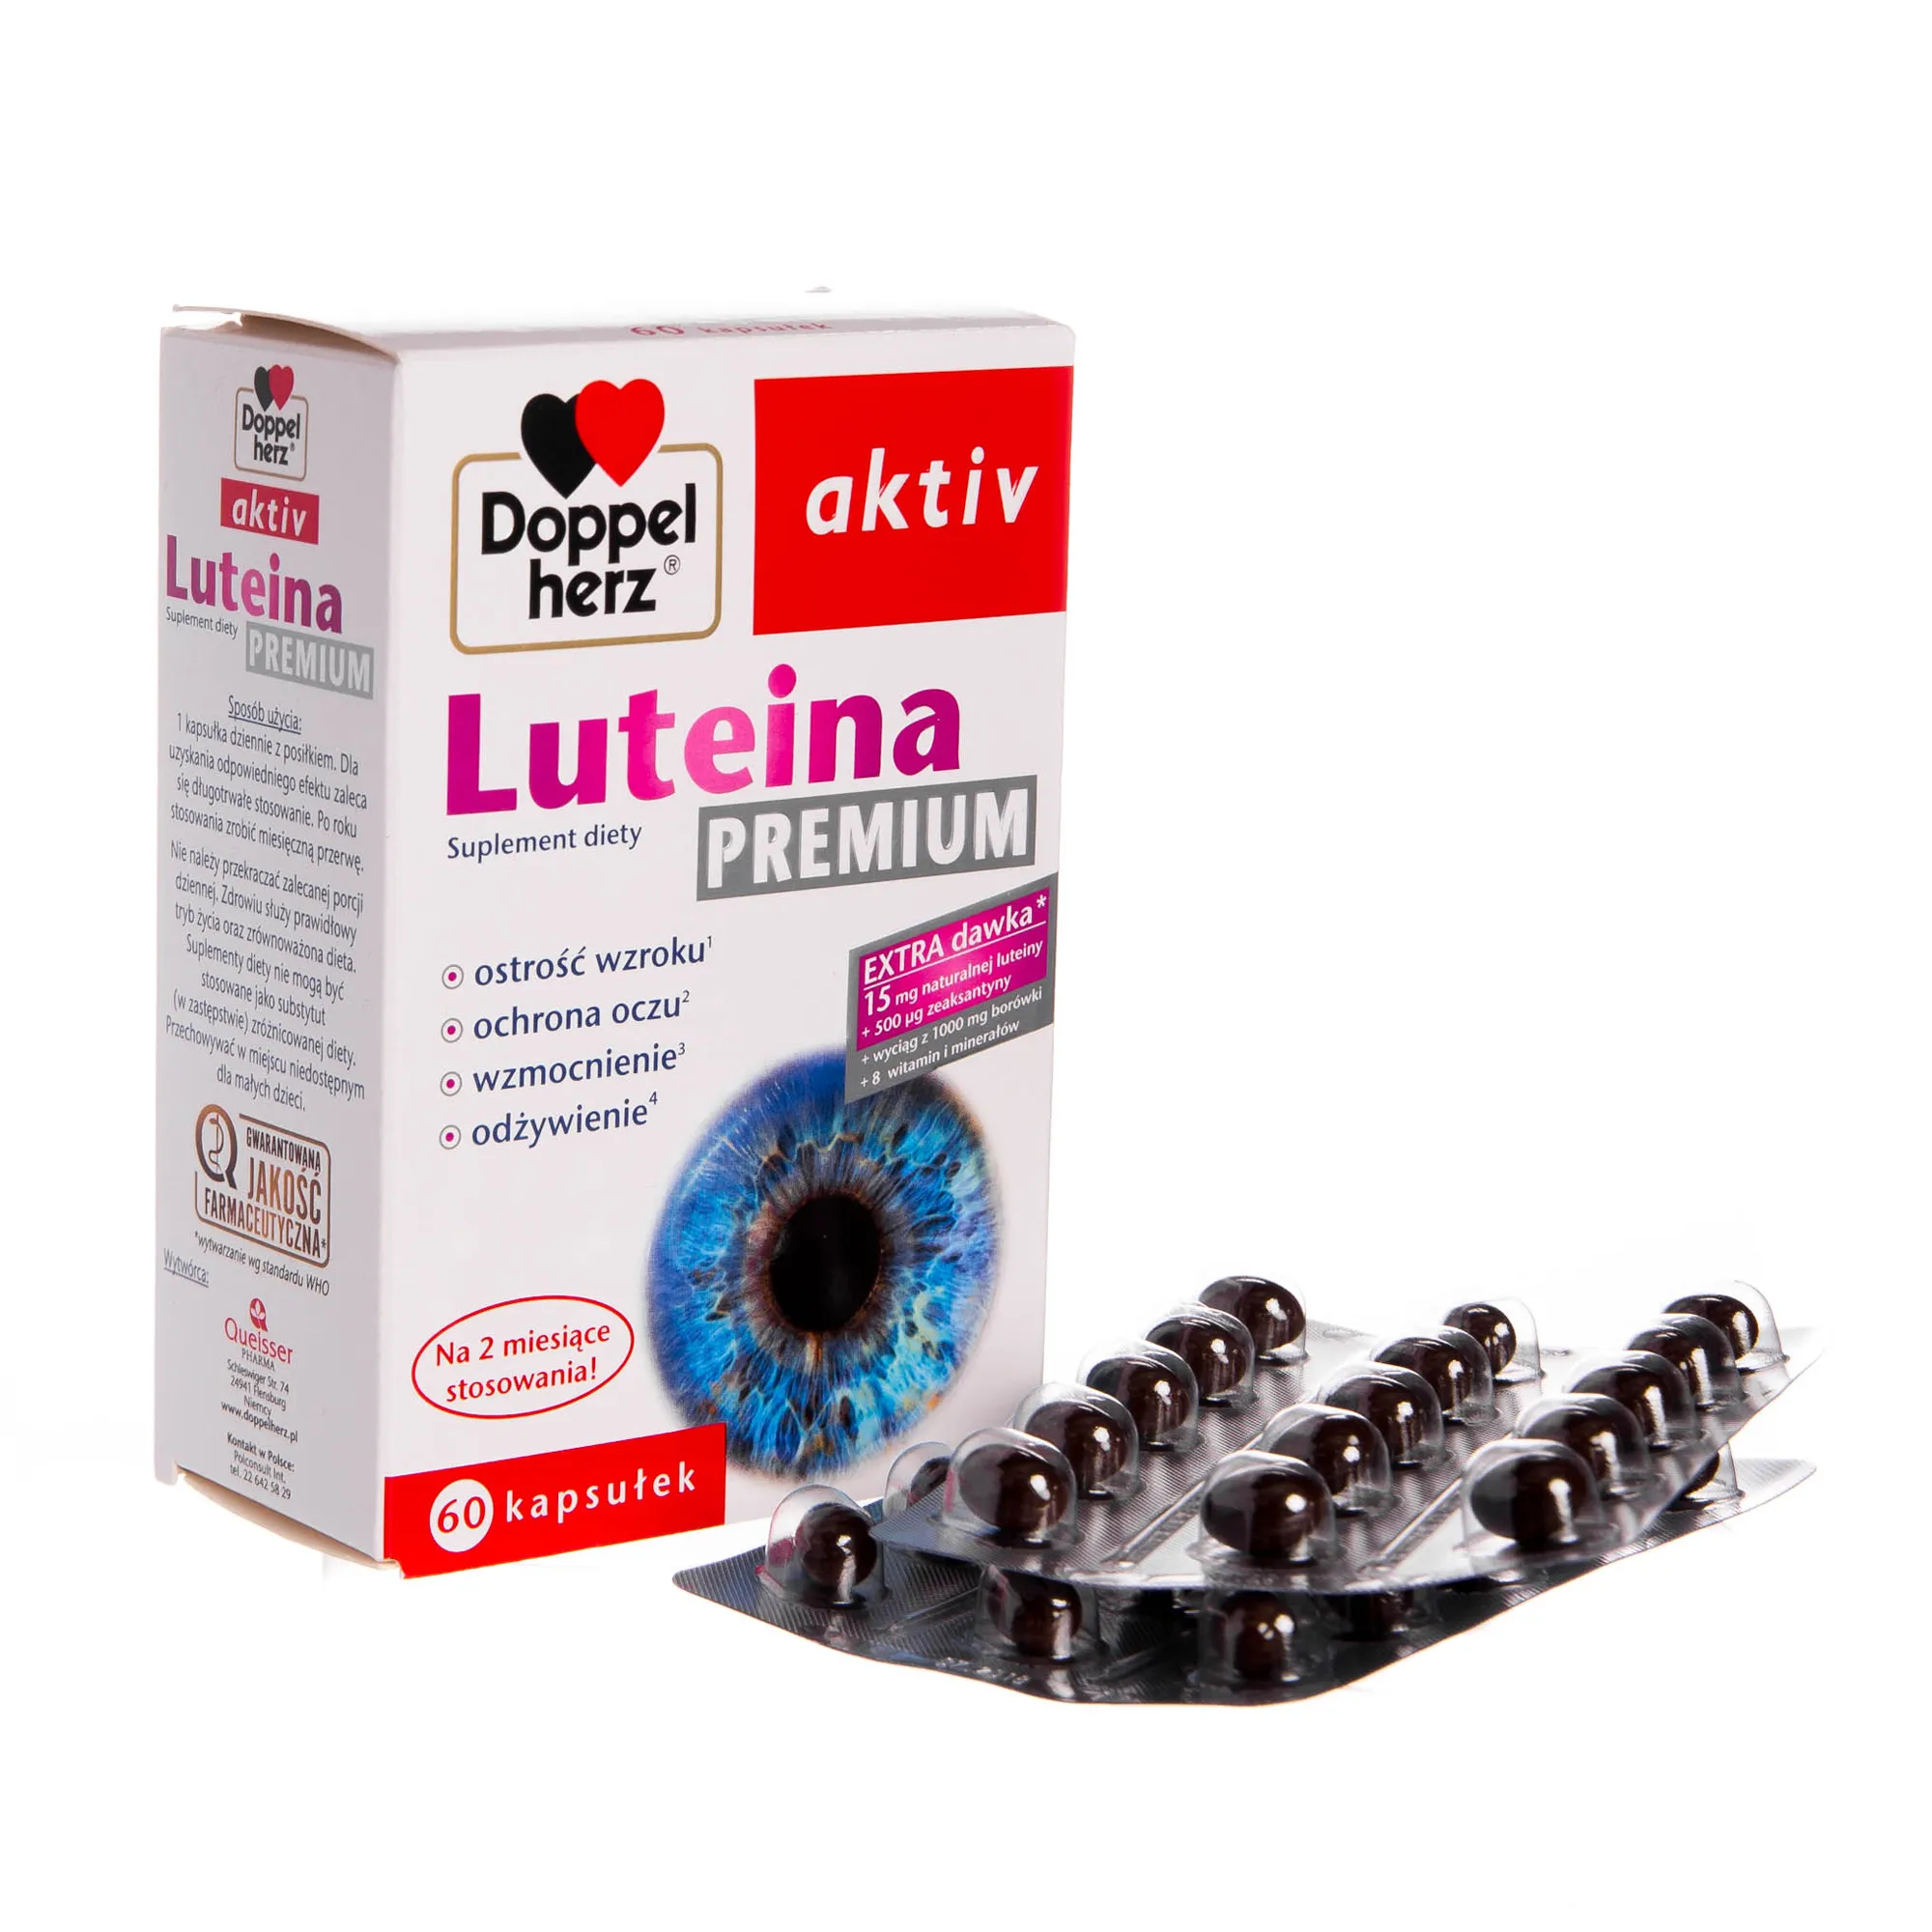 Doppelherz aktiv Luteina Premium suplement diety, 60 kapsułek 